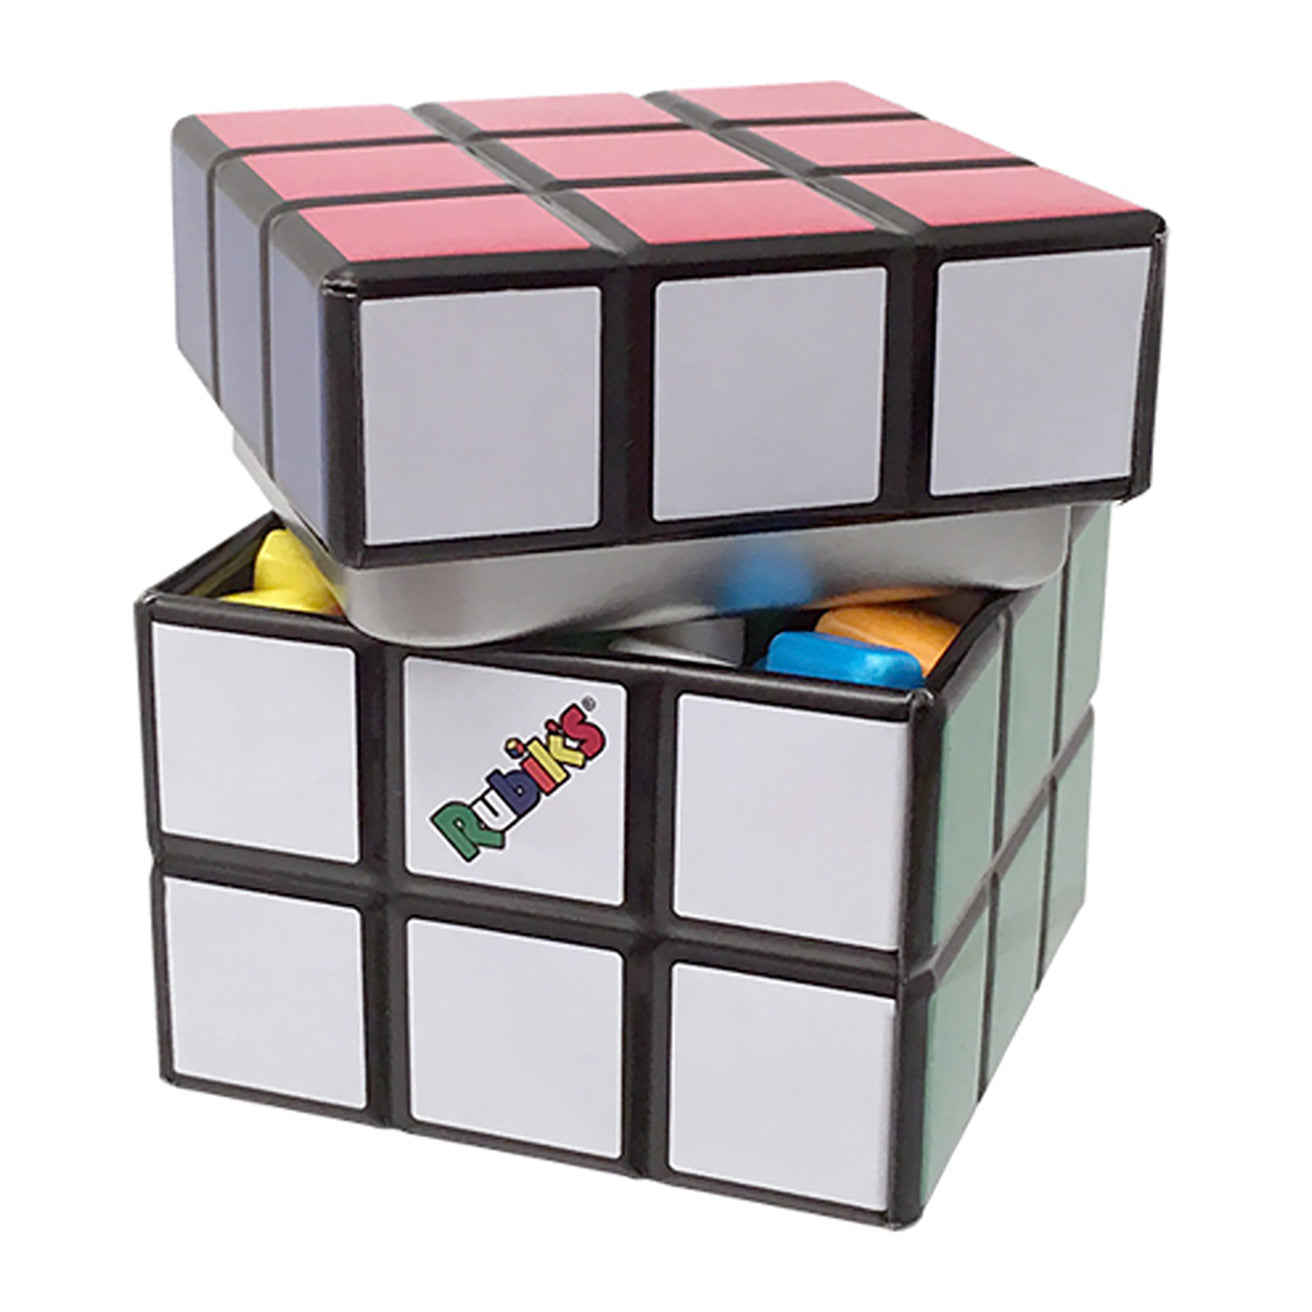 Rubik's Cube Candy Tin